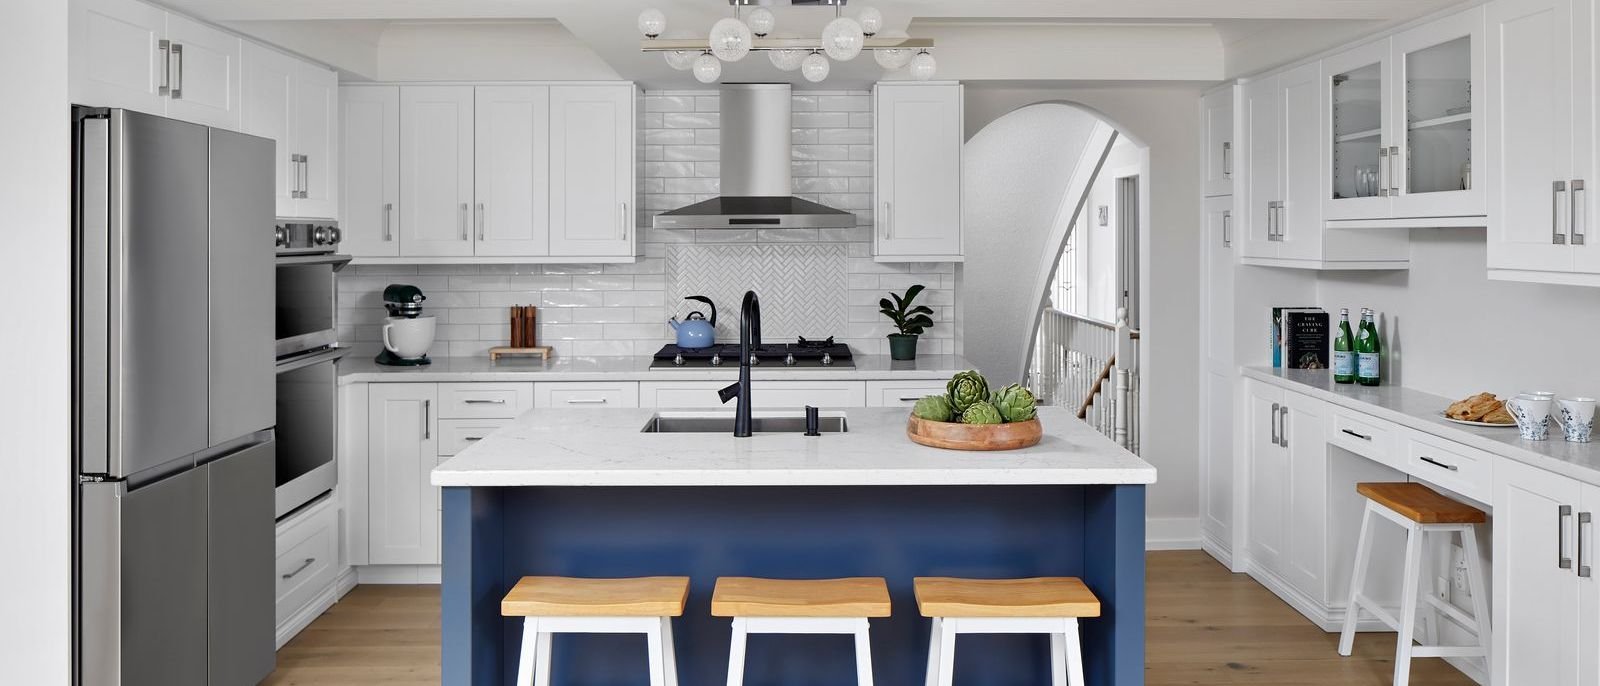 white modern kitchen with herringbone style backsplash blue island and barstools in markham universal designed renovation